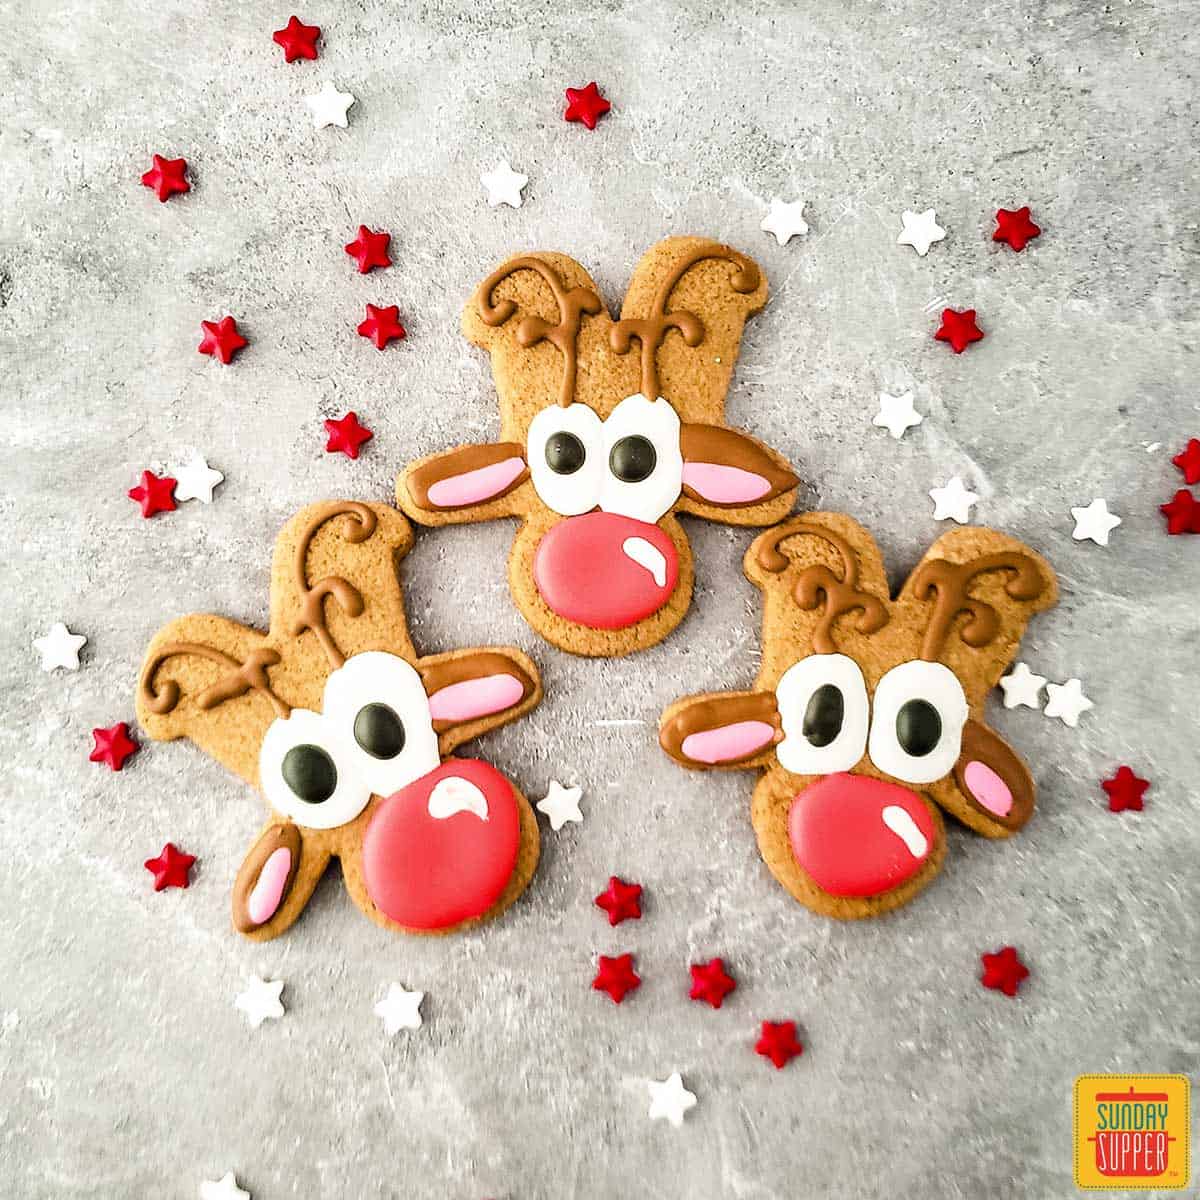 Three reindeer cookies on a surface with star sprinkles